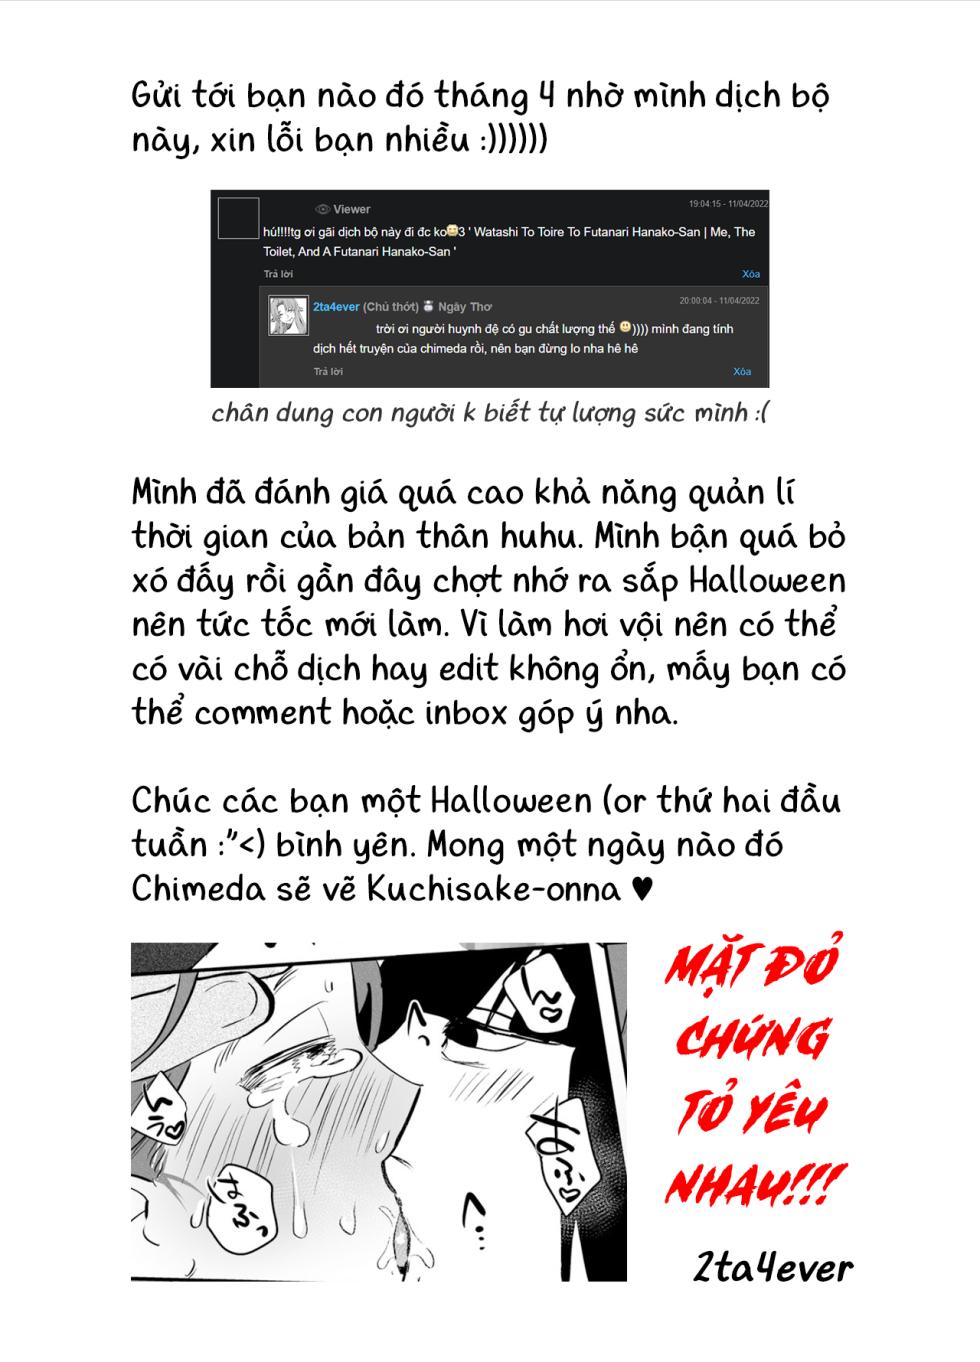 [Tosha Pink (Chimeda)] Watashi to toire to futanari Hanako-san | Mình, WC, và futanari Hanako-san [Vietnamese Tiếng Việt] [2ta4ever] - Page 35